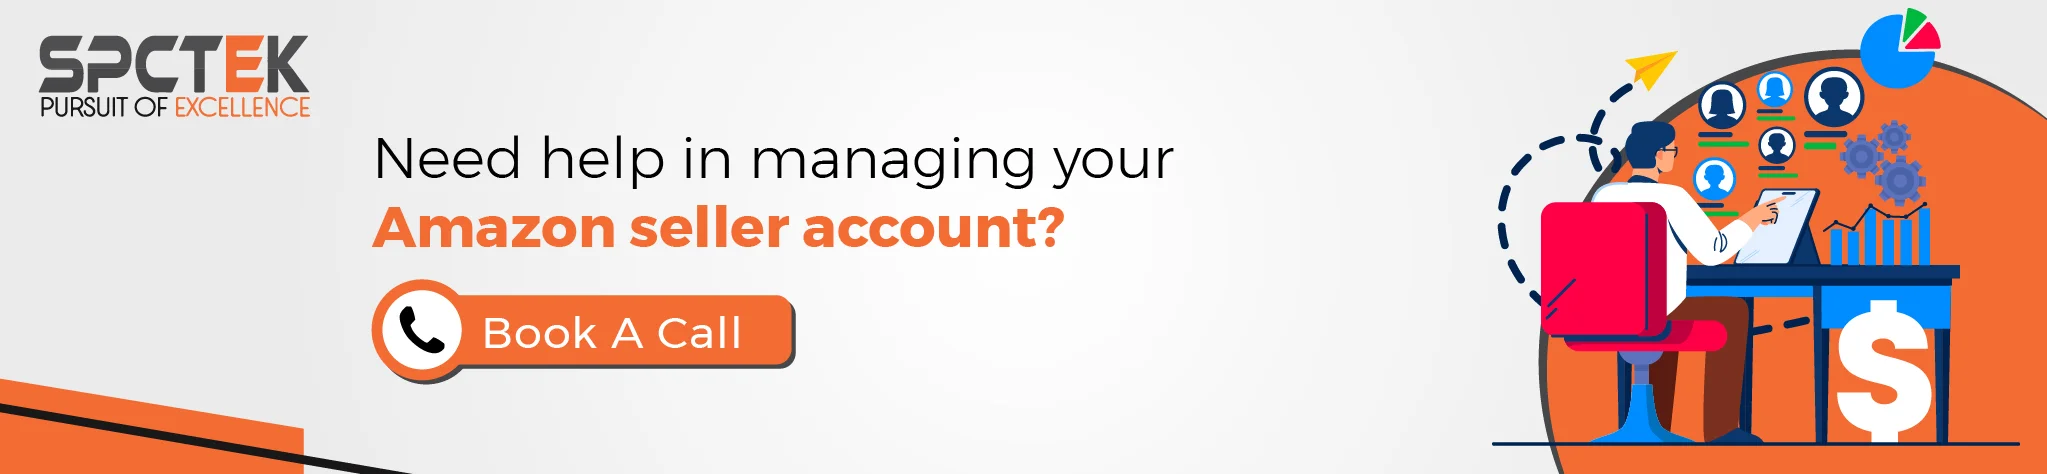 Amazon seller account management CTA button